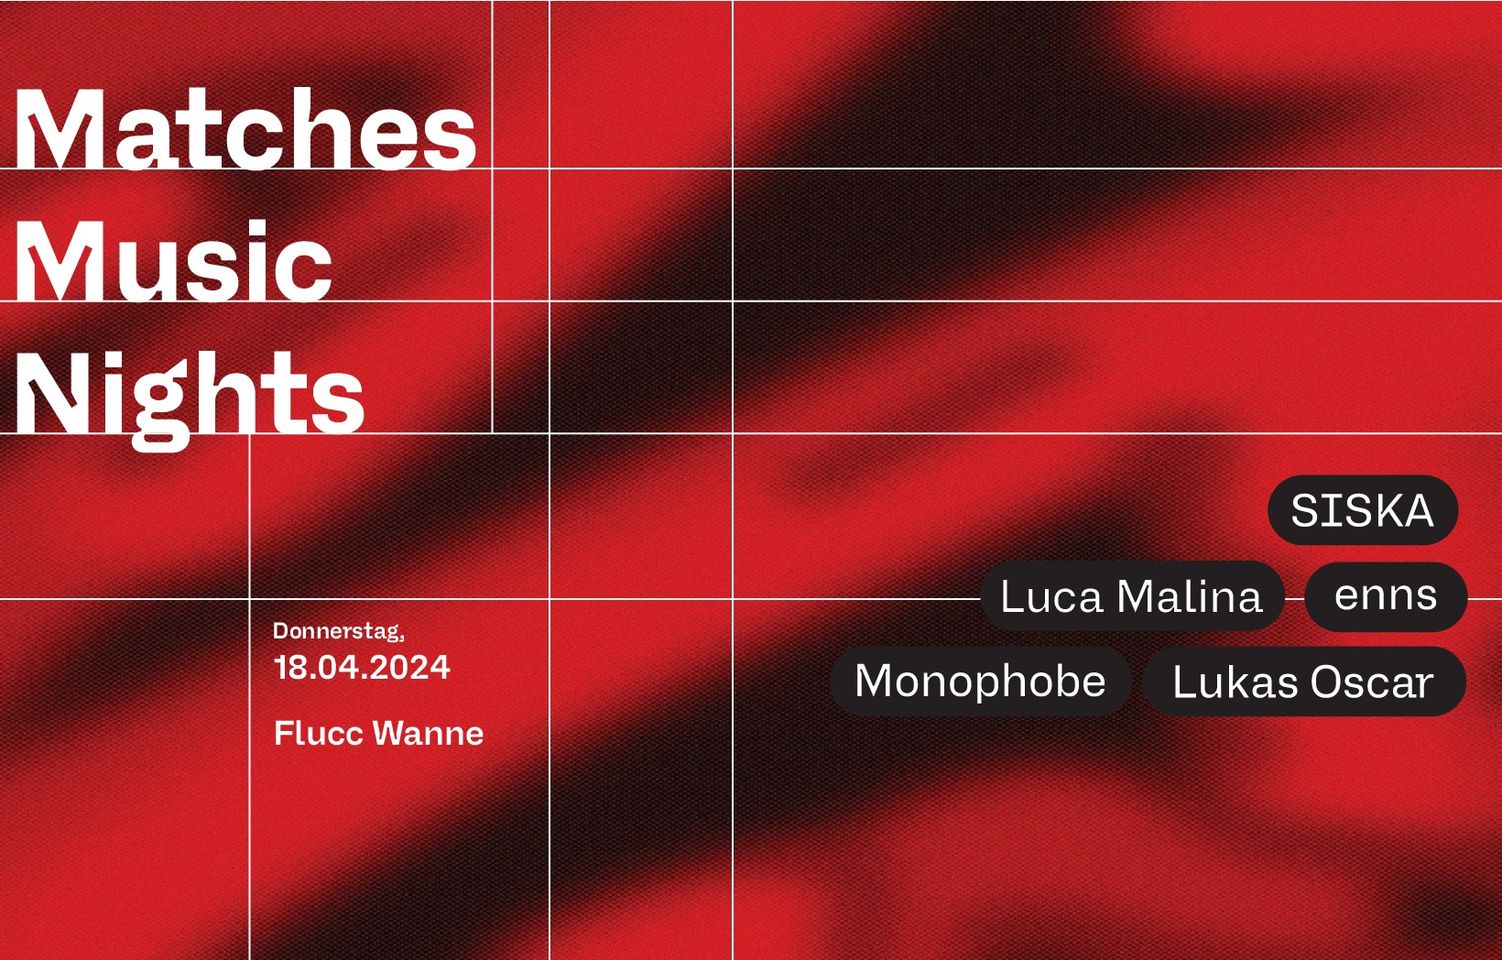 Matches Music Nights am 18. April 2024 @ Flucc.